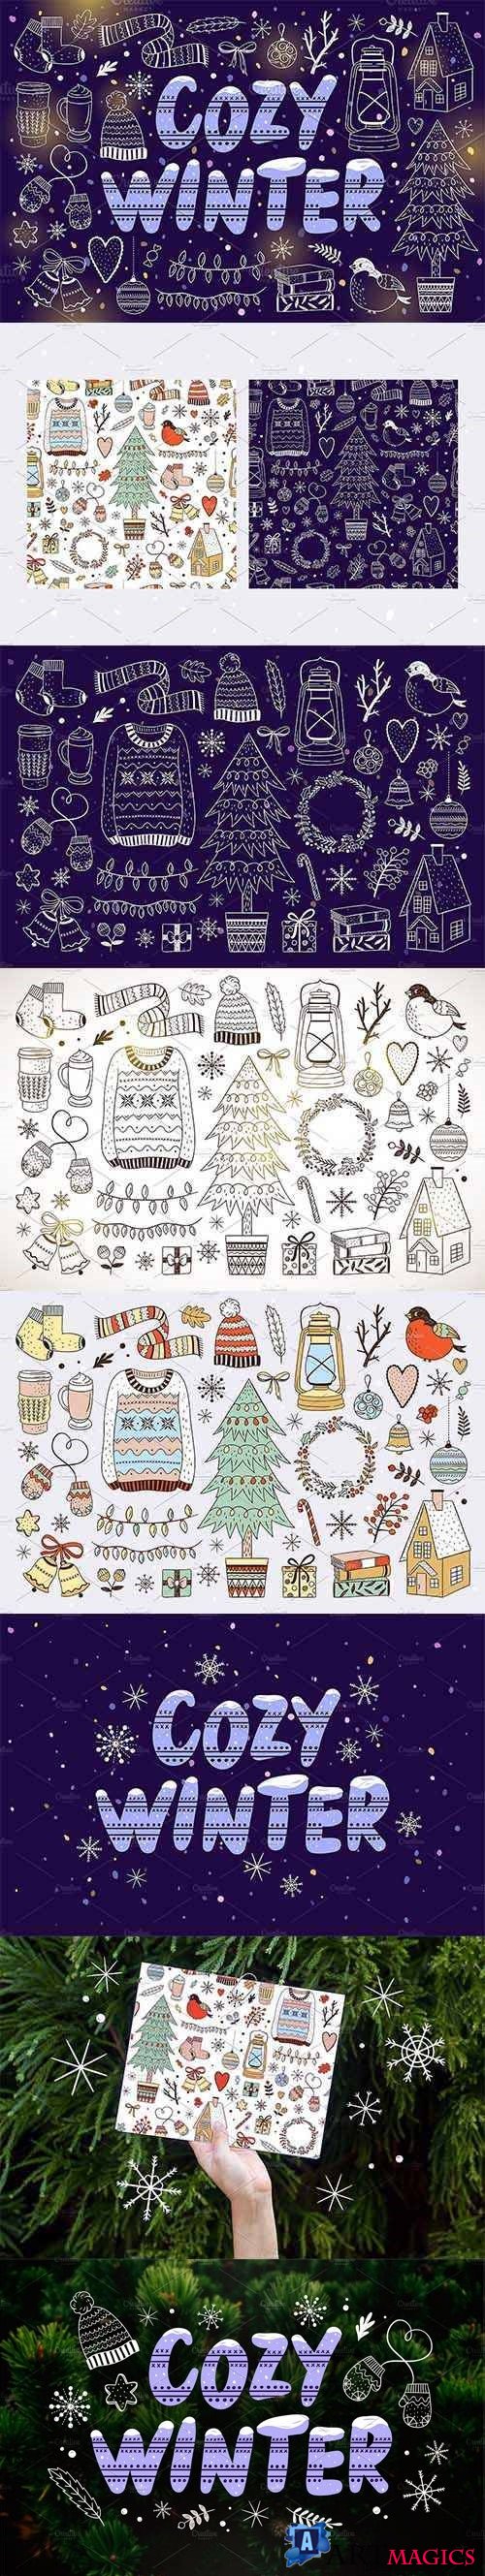 Cozy Winter Illustrations + Patterns - 2008536